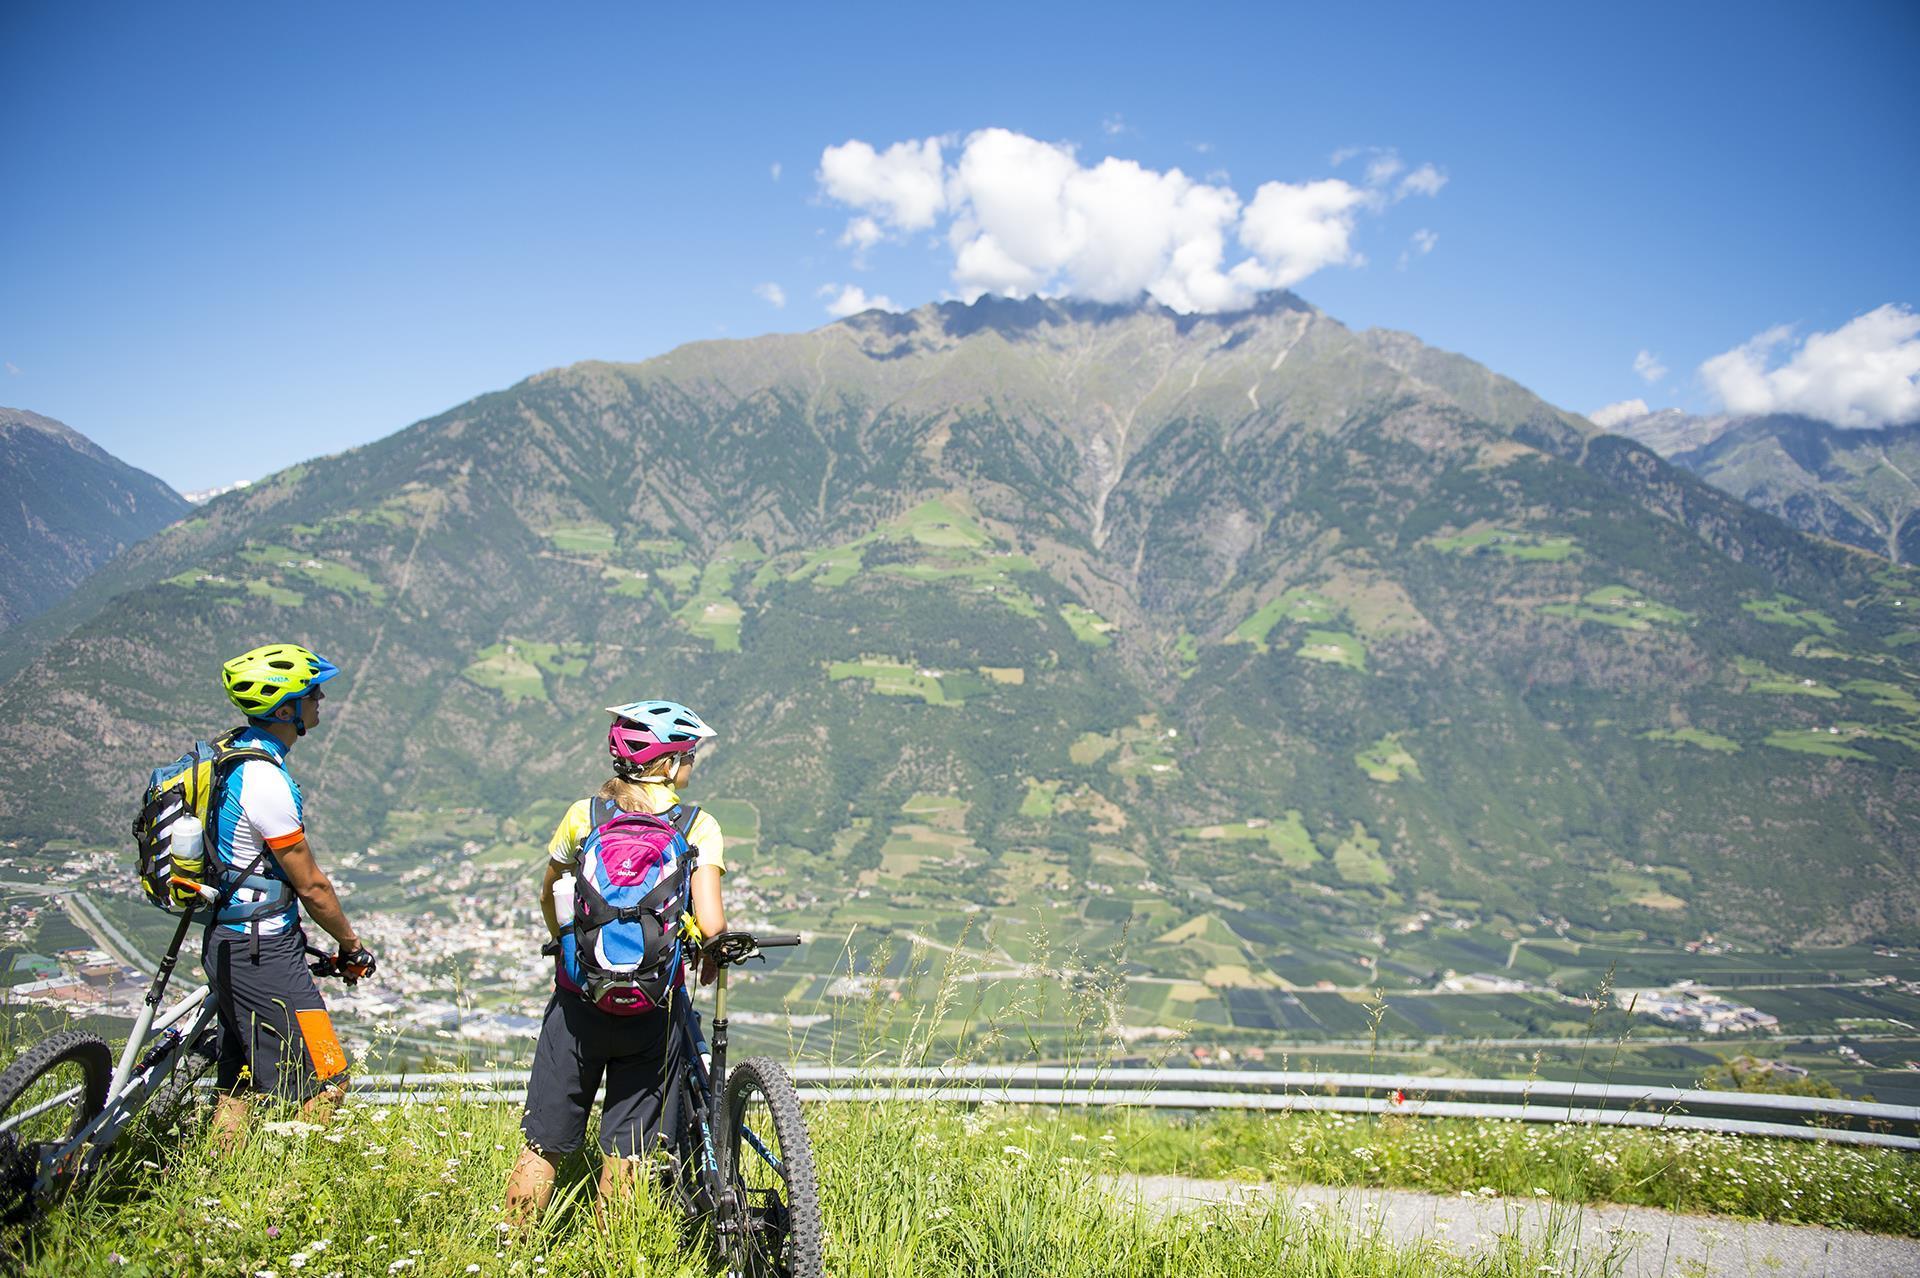 Mountain bikers in Naturno can enjoy wonderful views